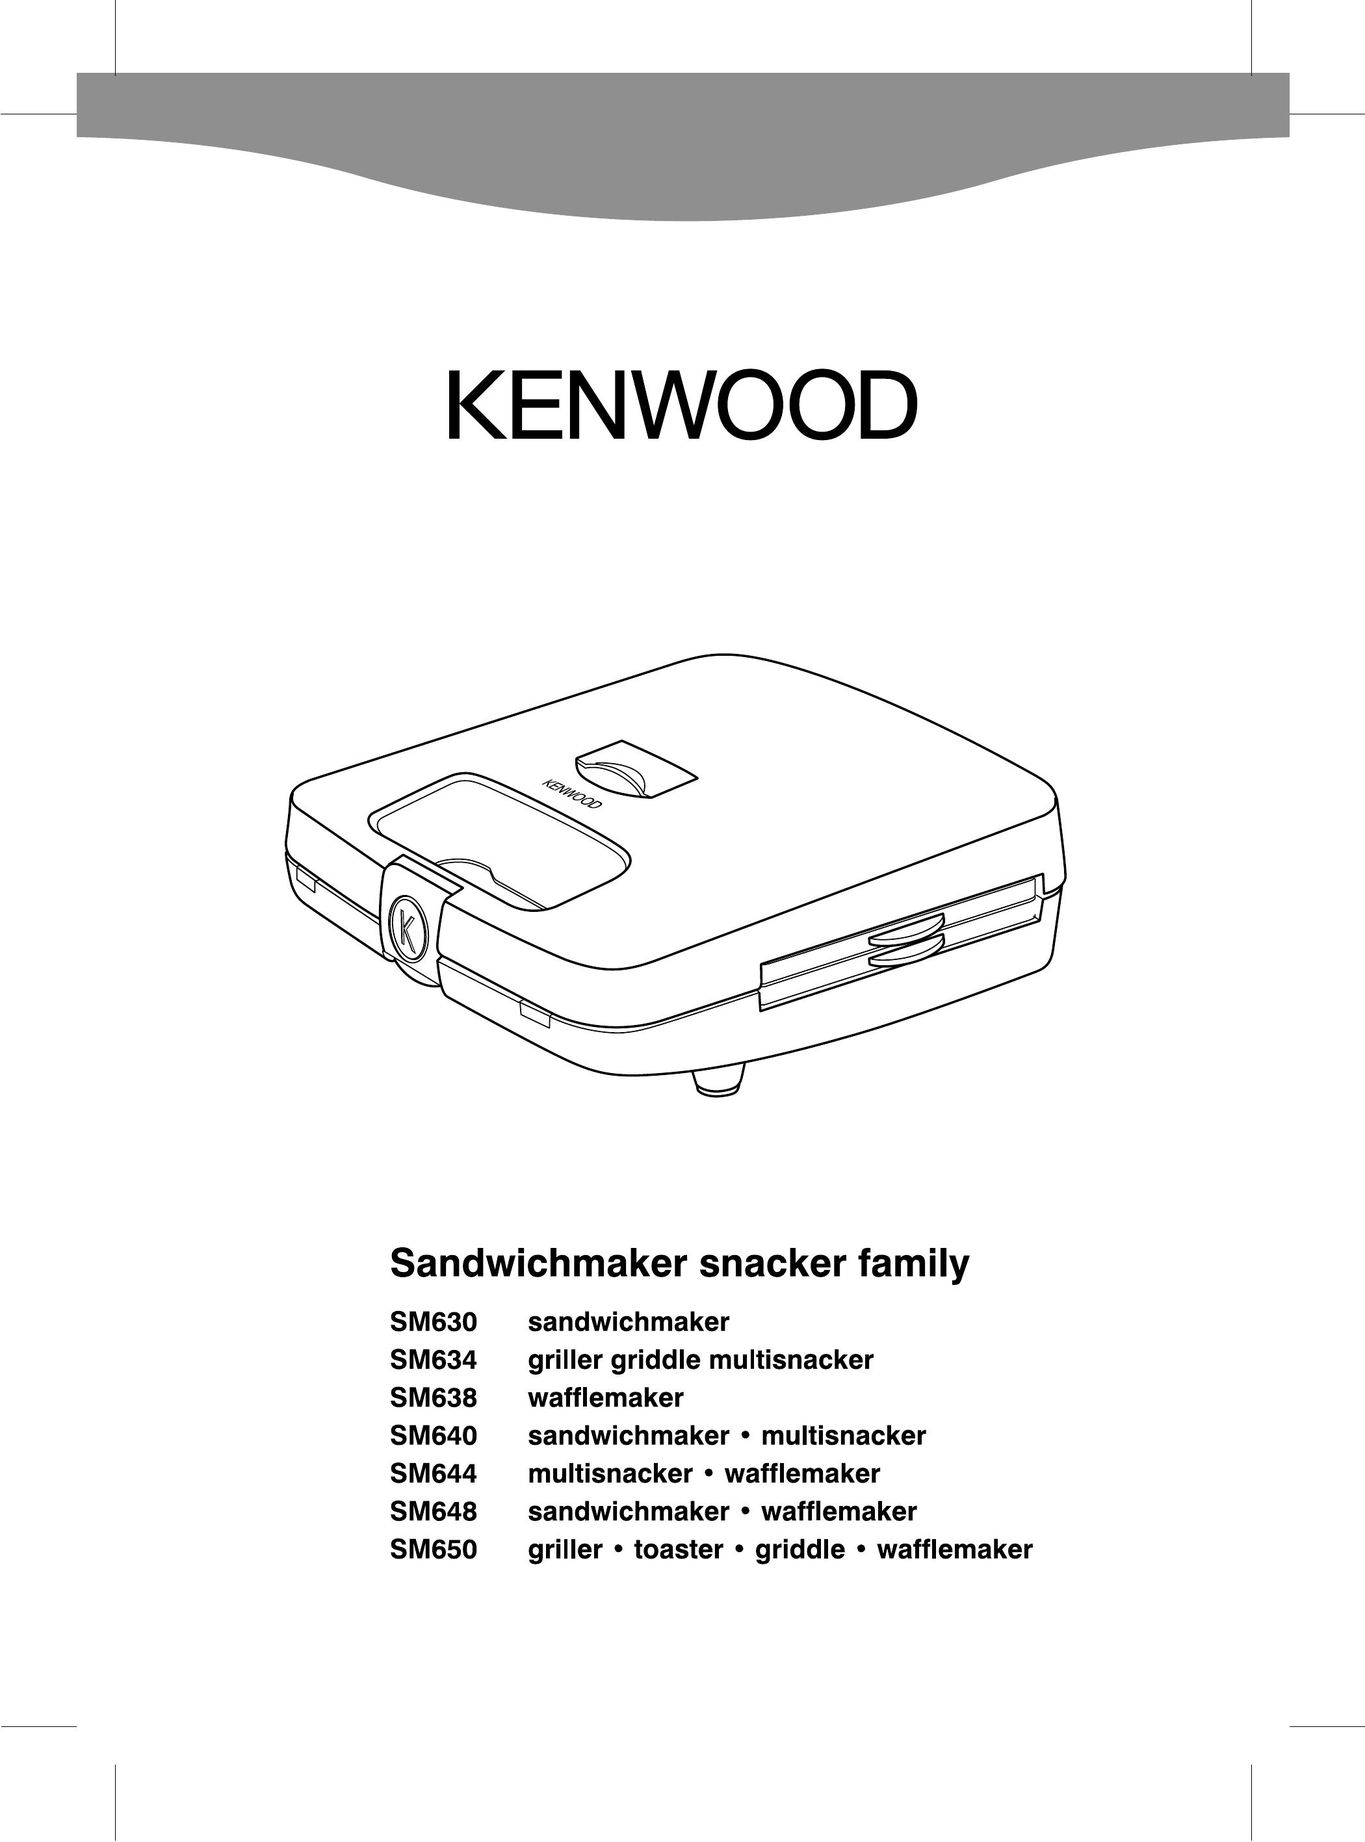 Kenwood SM650 Kitchen Grill User Manual